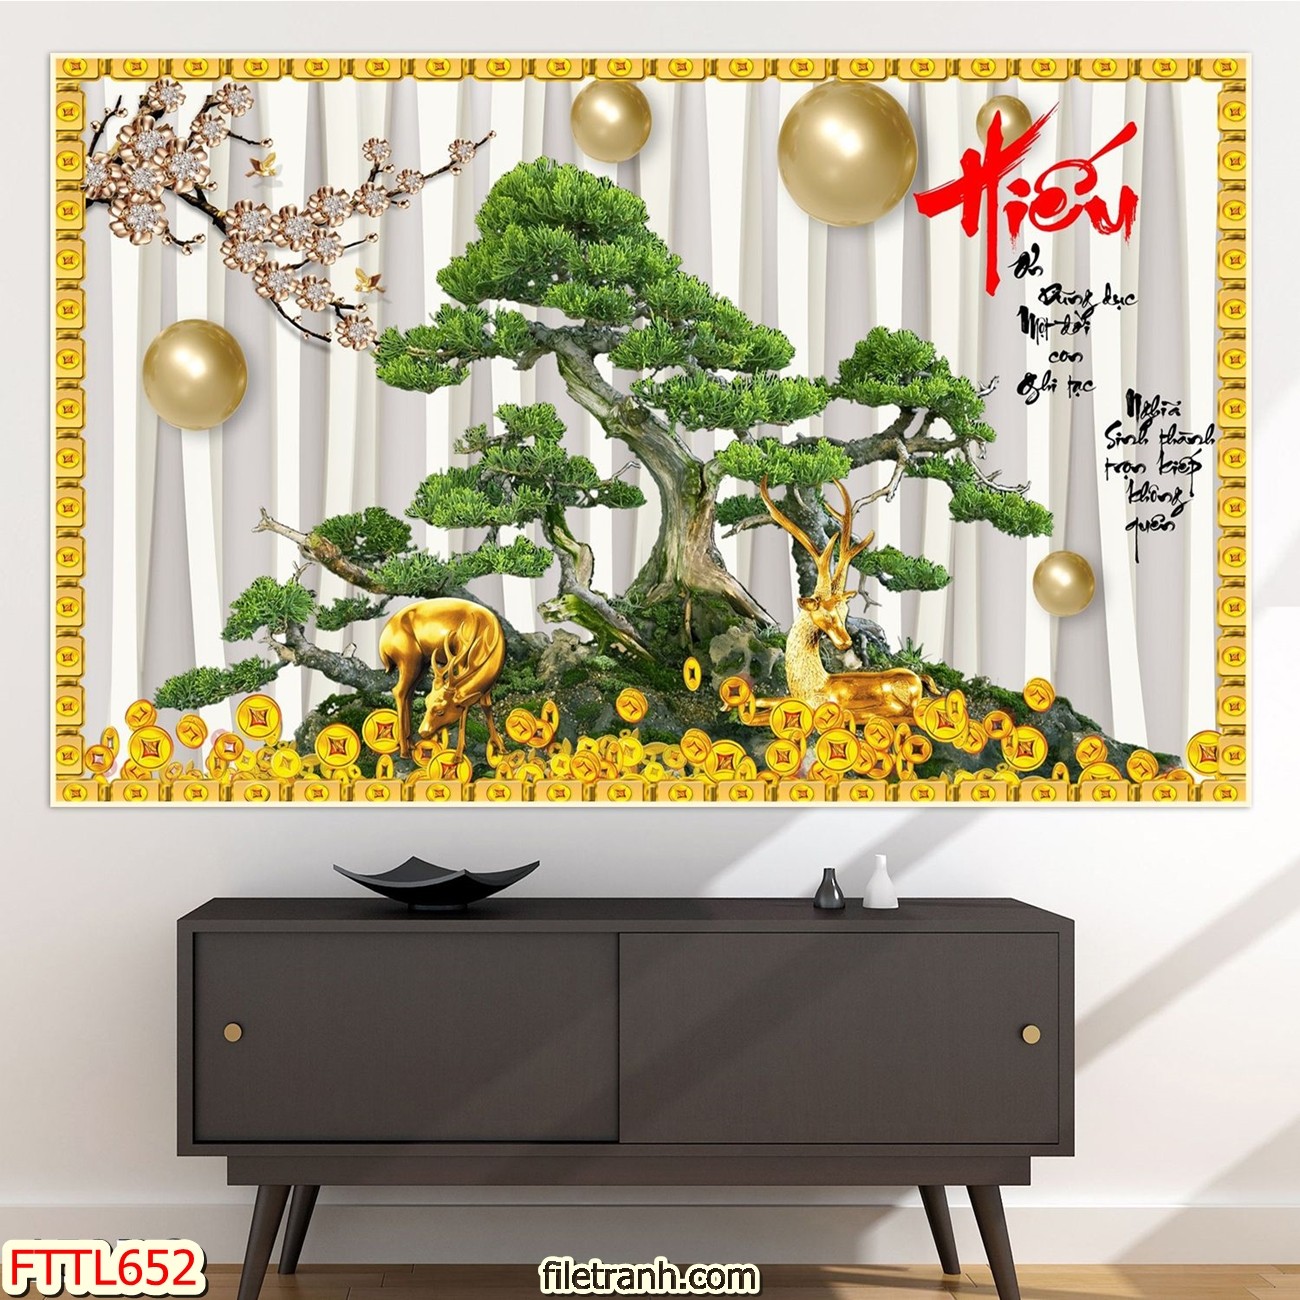 https://filetranh.com/file-tranh-chau-mai-bonsai/file-tranh-chau-mai-bonsai-fttl652.html